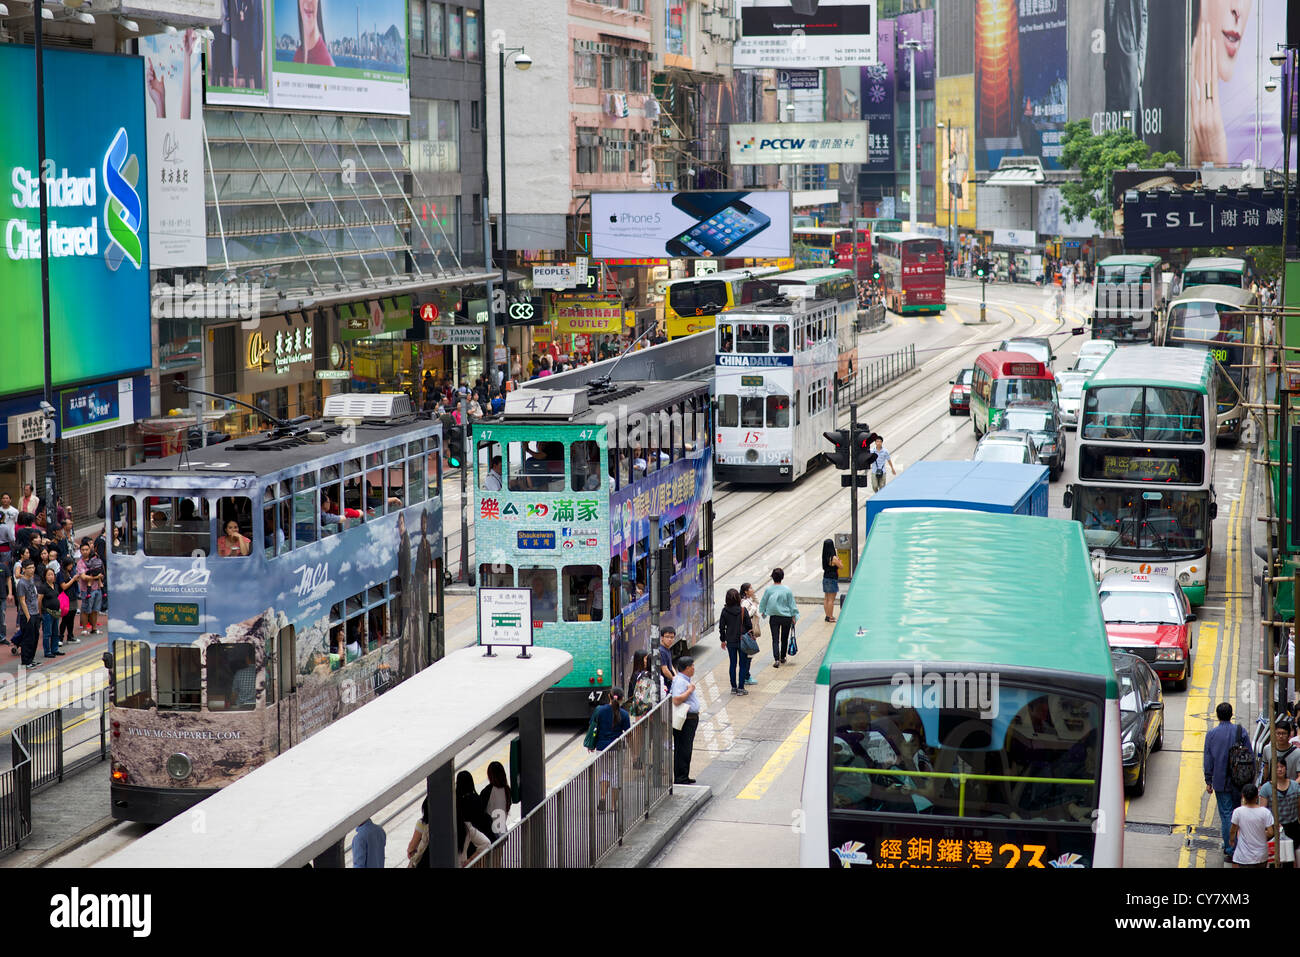 Street scene in busy Causeway Bay Stock Photo